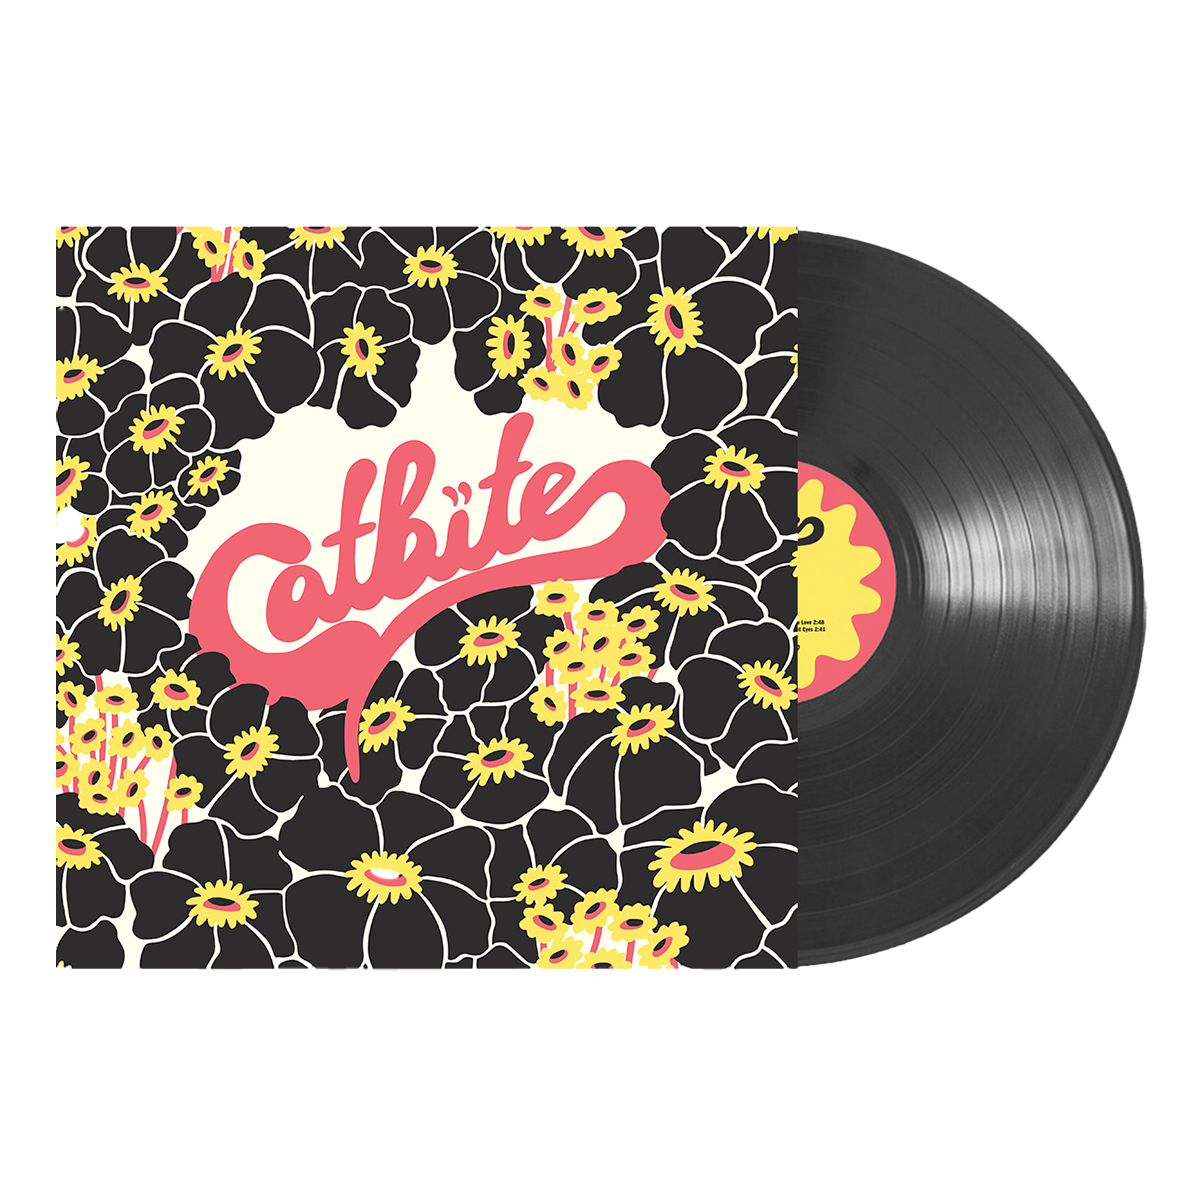 Catbite - S/T Vinyl